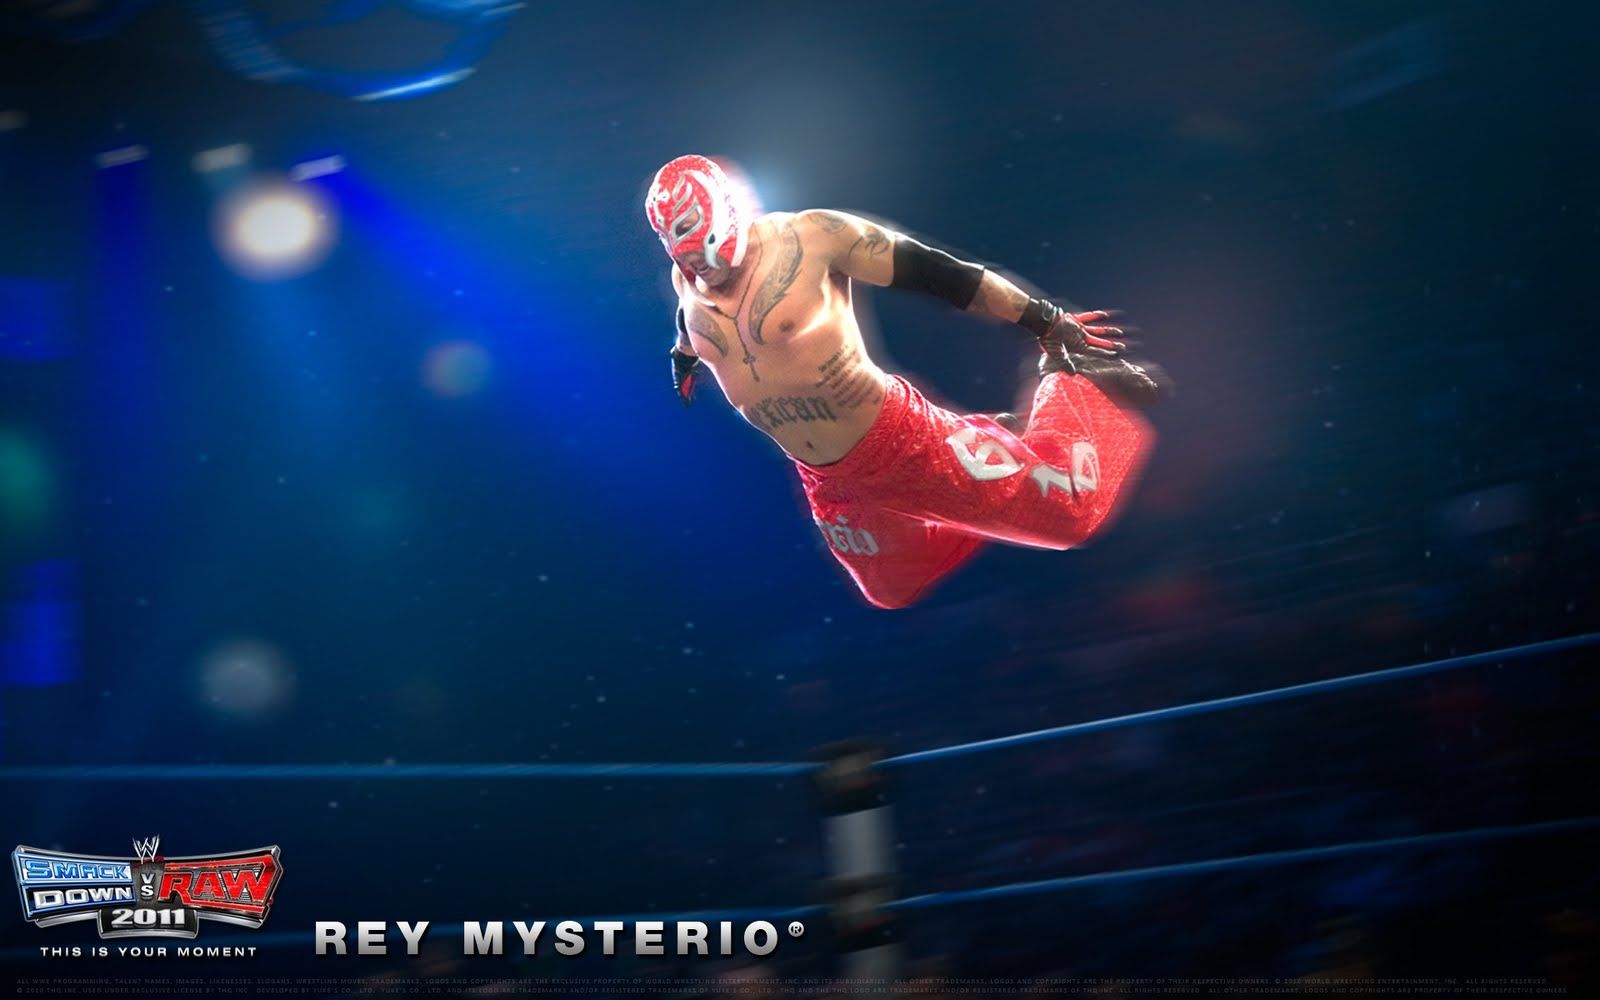 53-539052_rey-mysterio-fly-wallpaper-hd.jpg